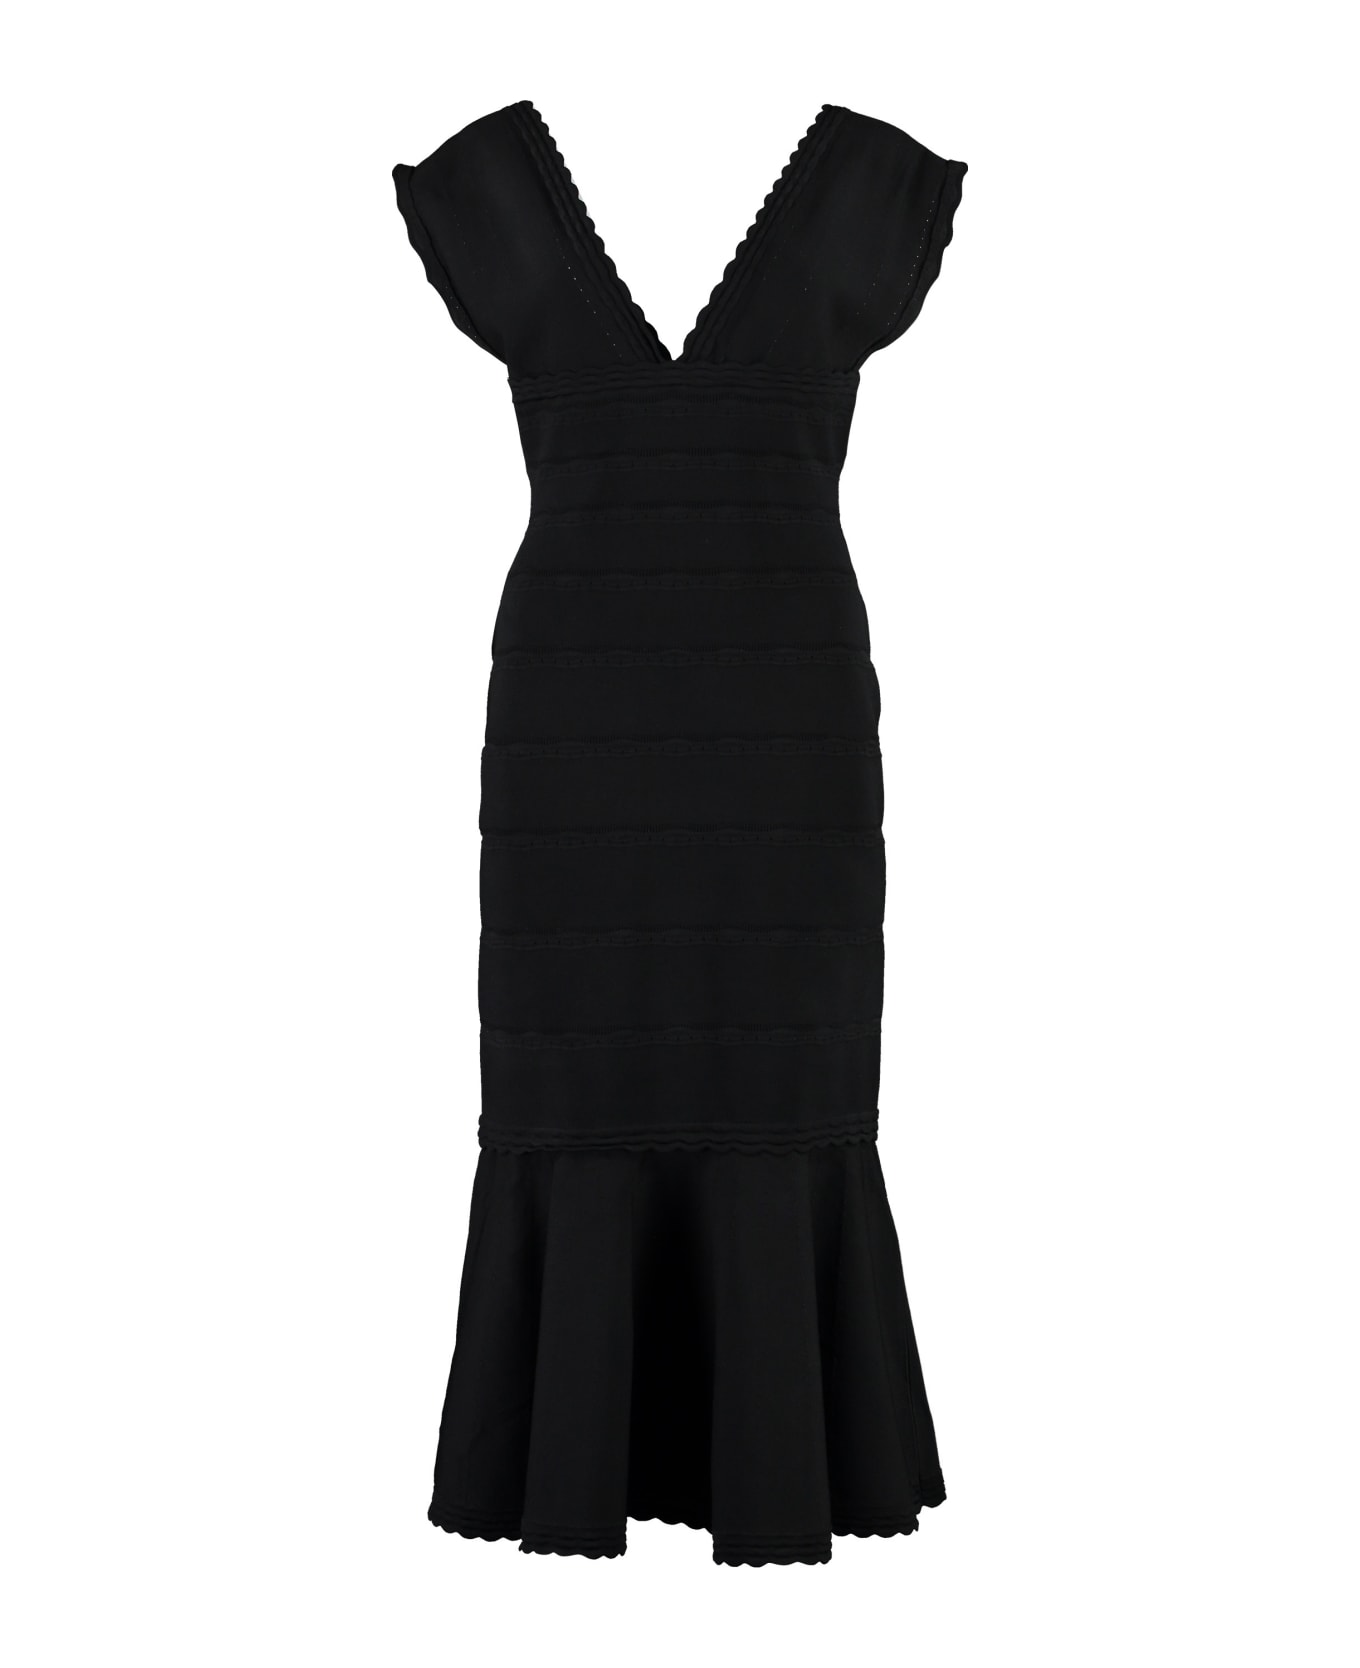 Victoria Beckham Flared Dress - black